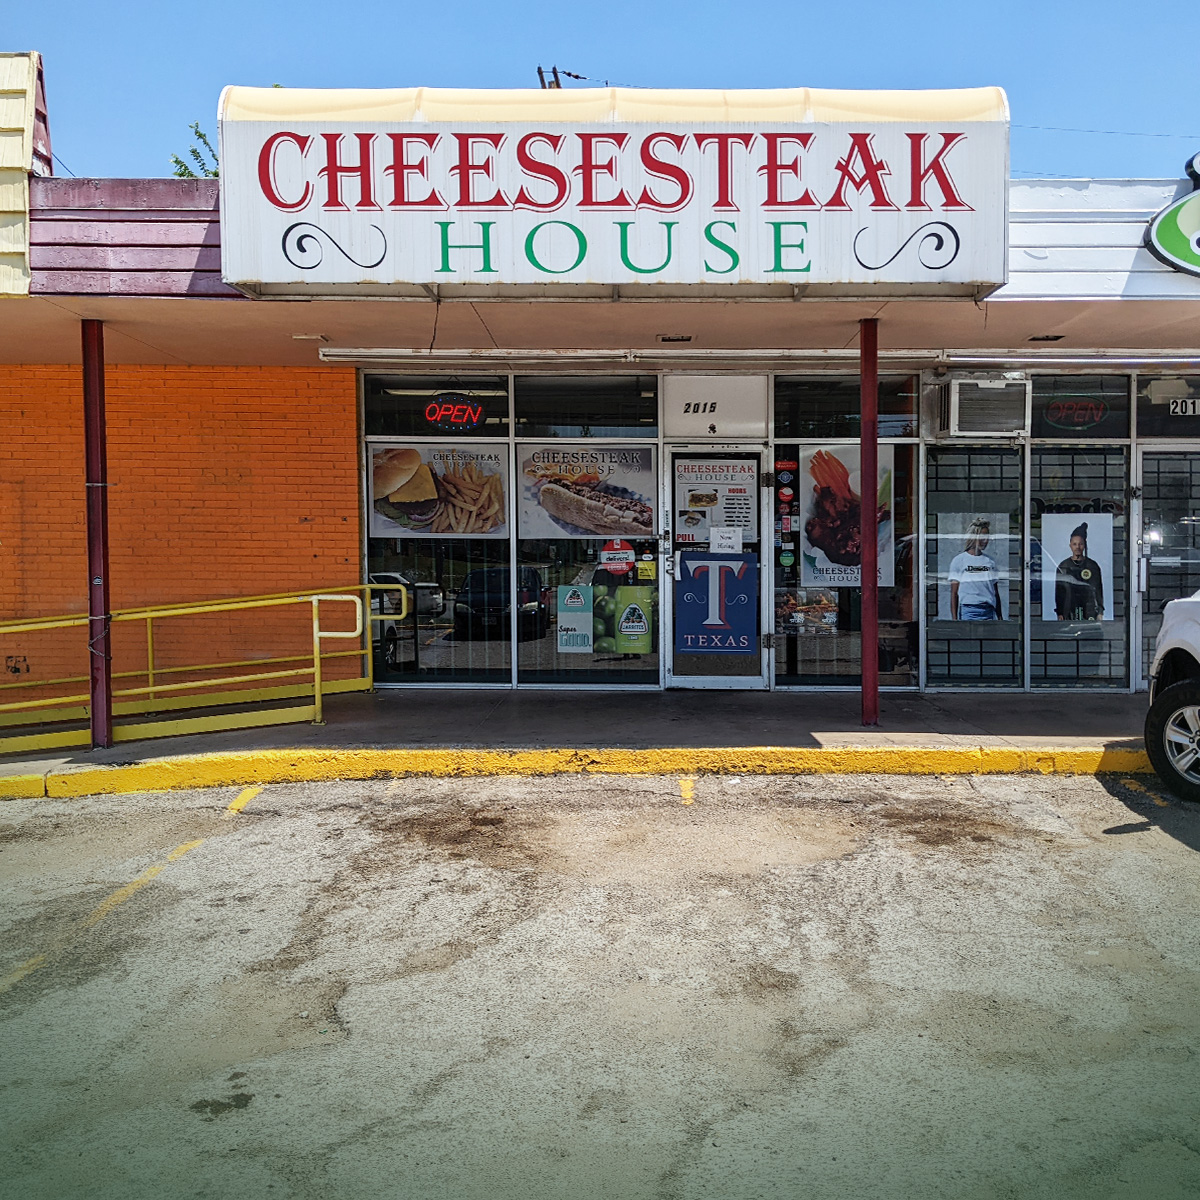 Cheesesteak House - Oak Cliff, Dallas, Texas